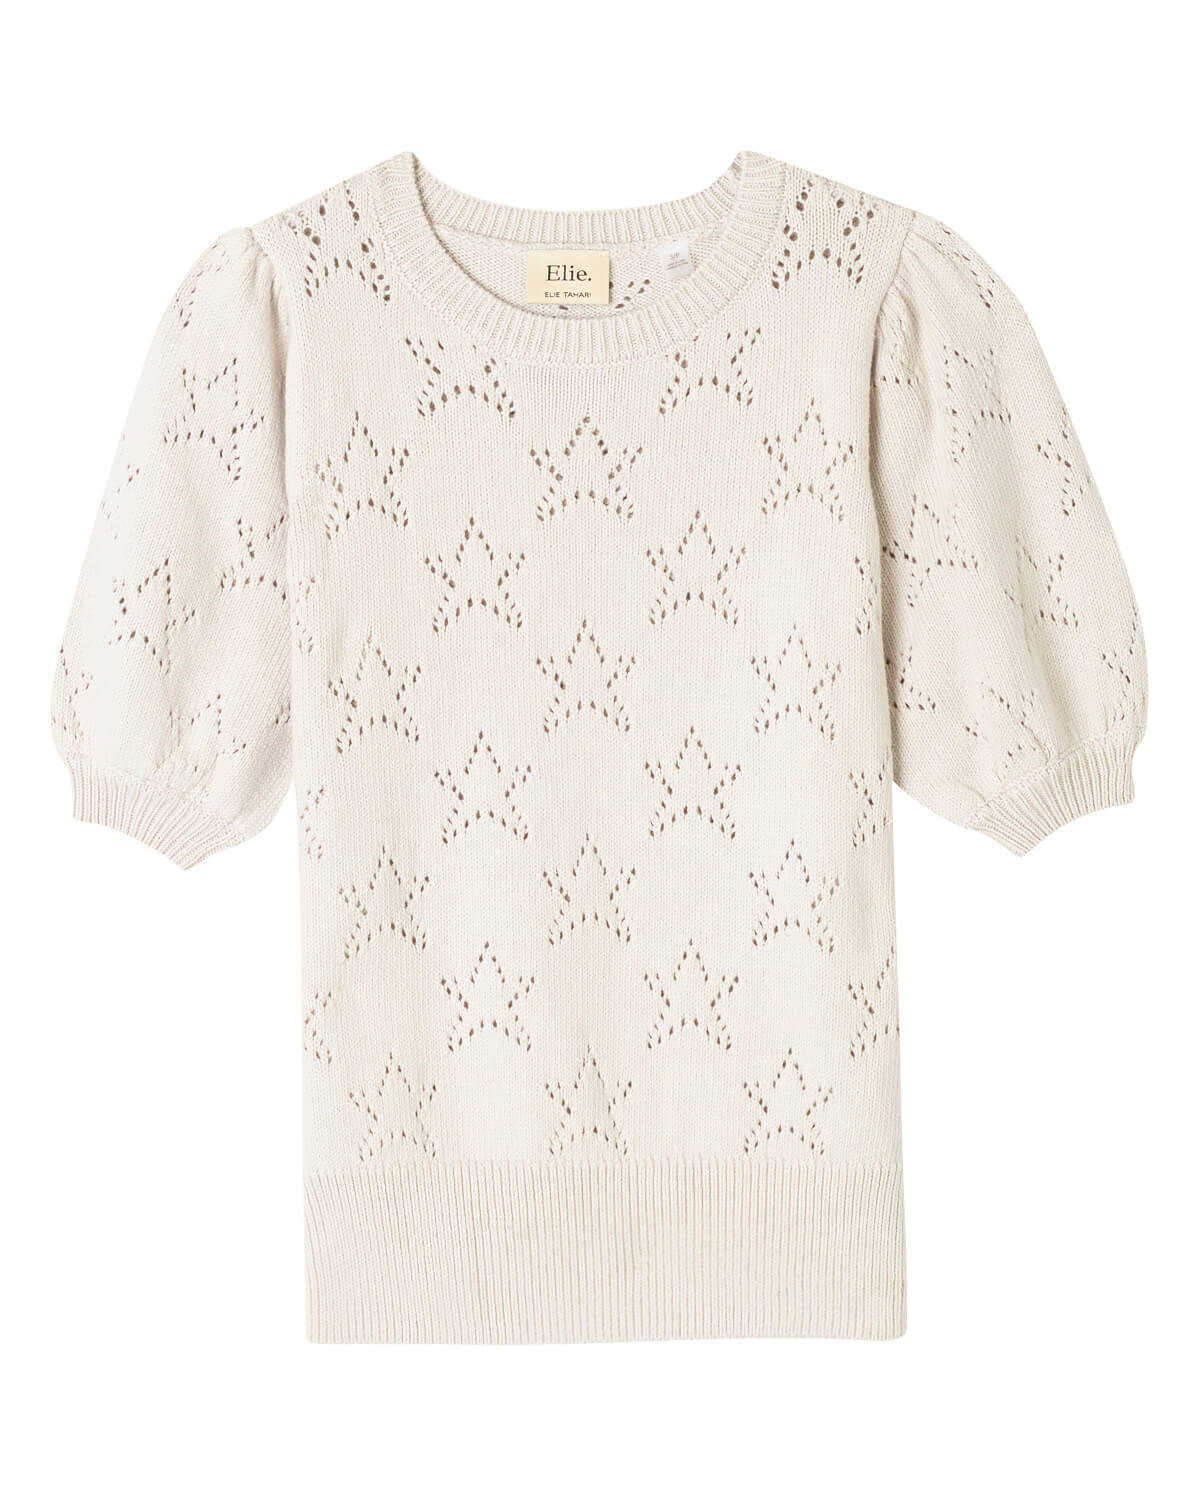 Elie Elie Tahari Women's Cotton Blend Star Knit Sweater | JANE + MERCER